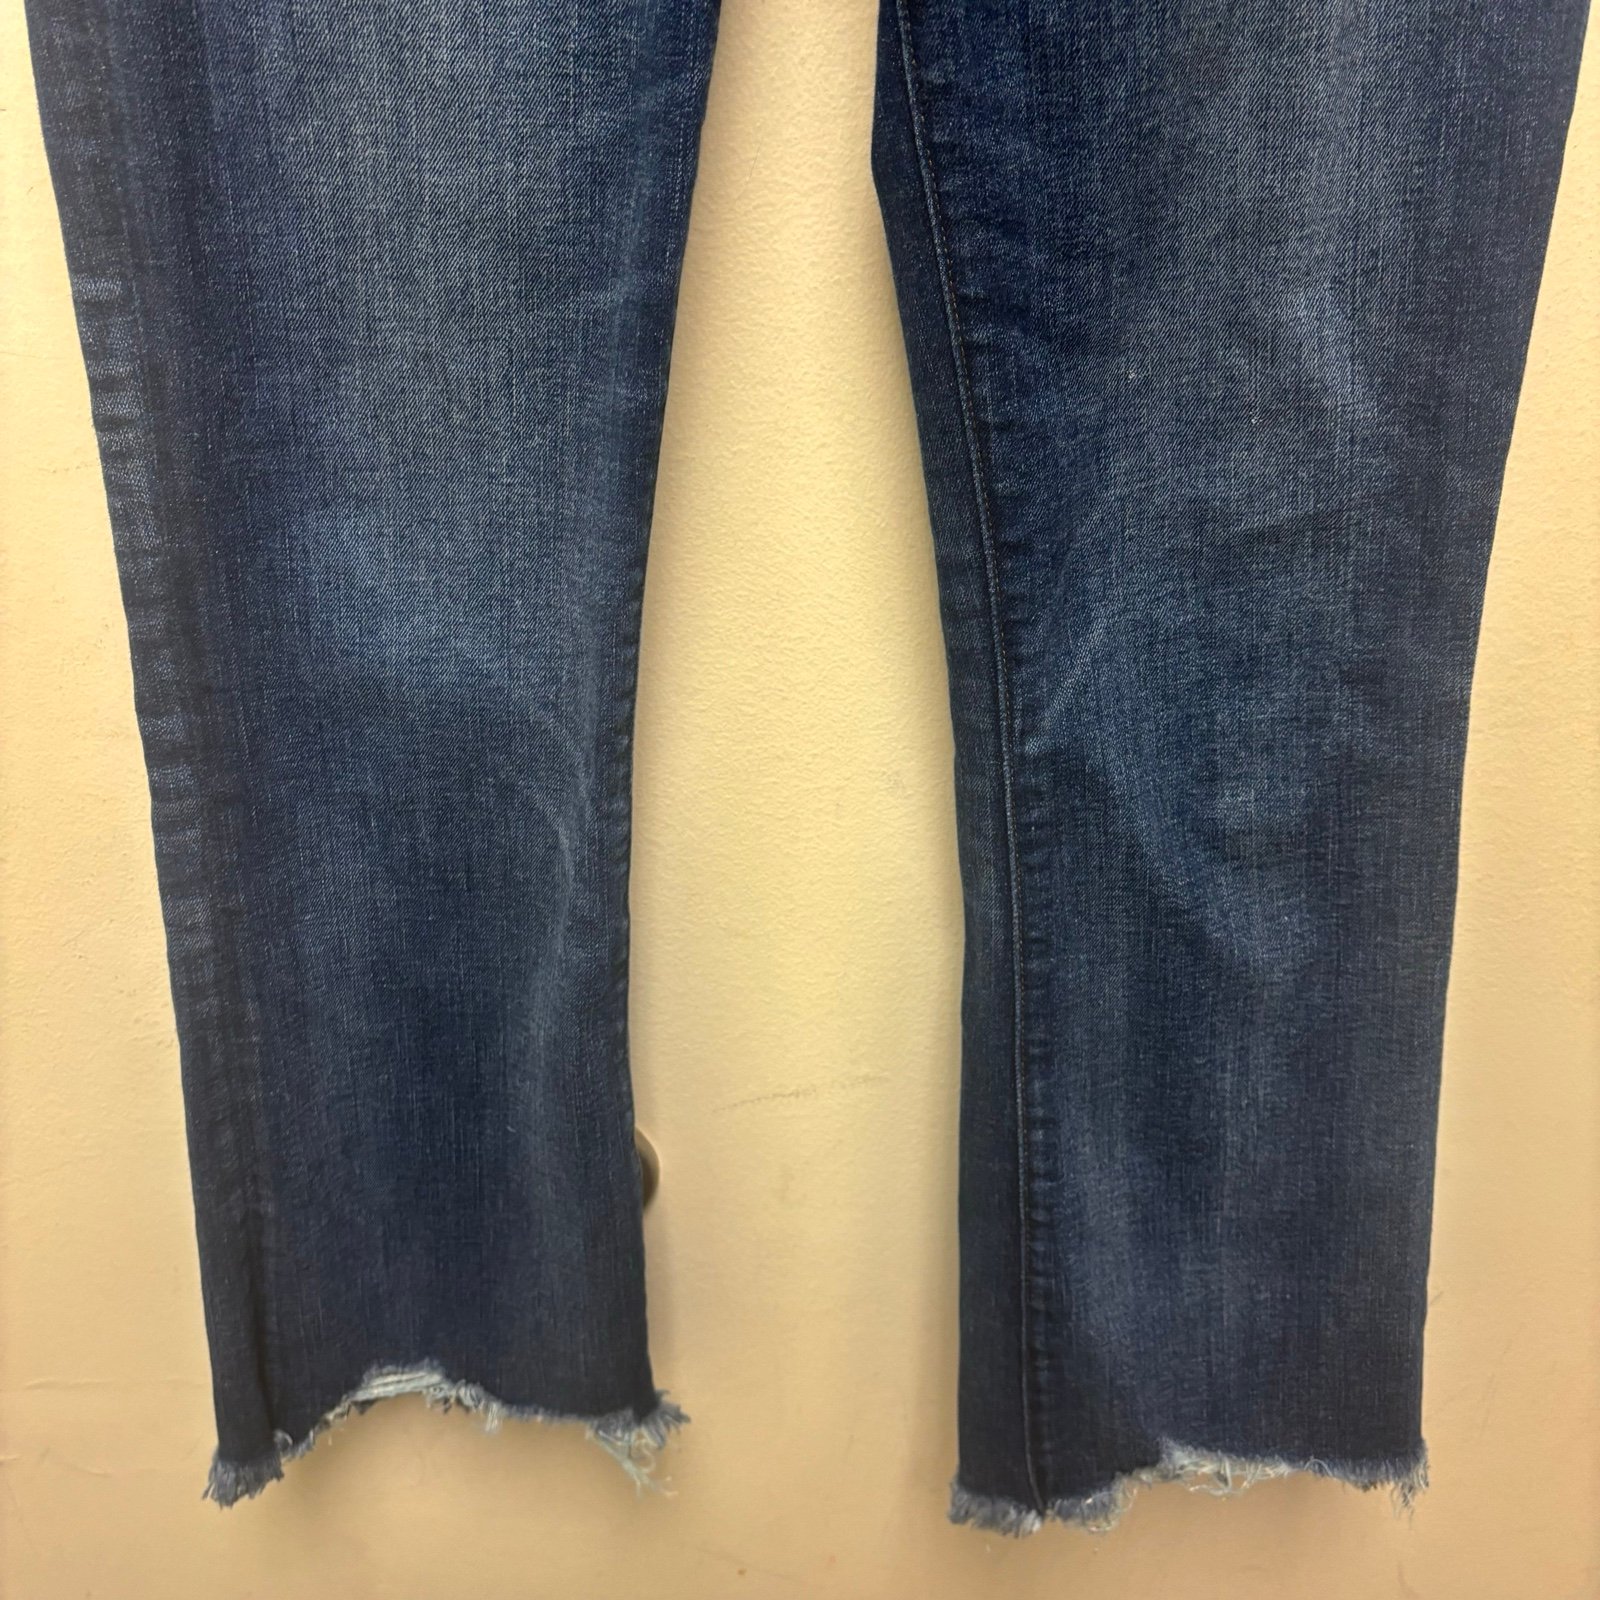 Buy Point Sur 10” Demi Boot Jeans iSu4AvwjM just buy it